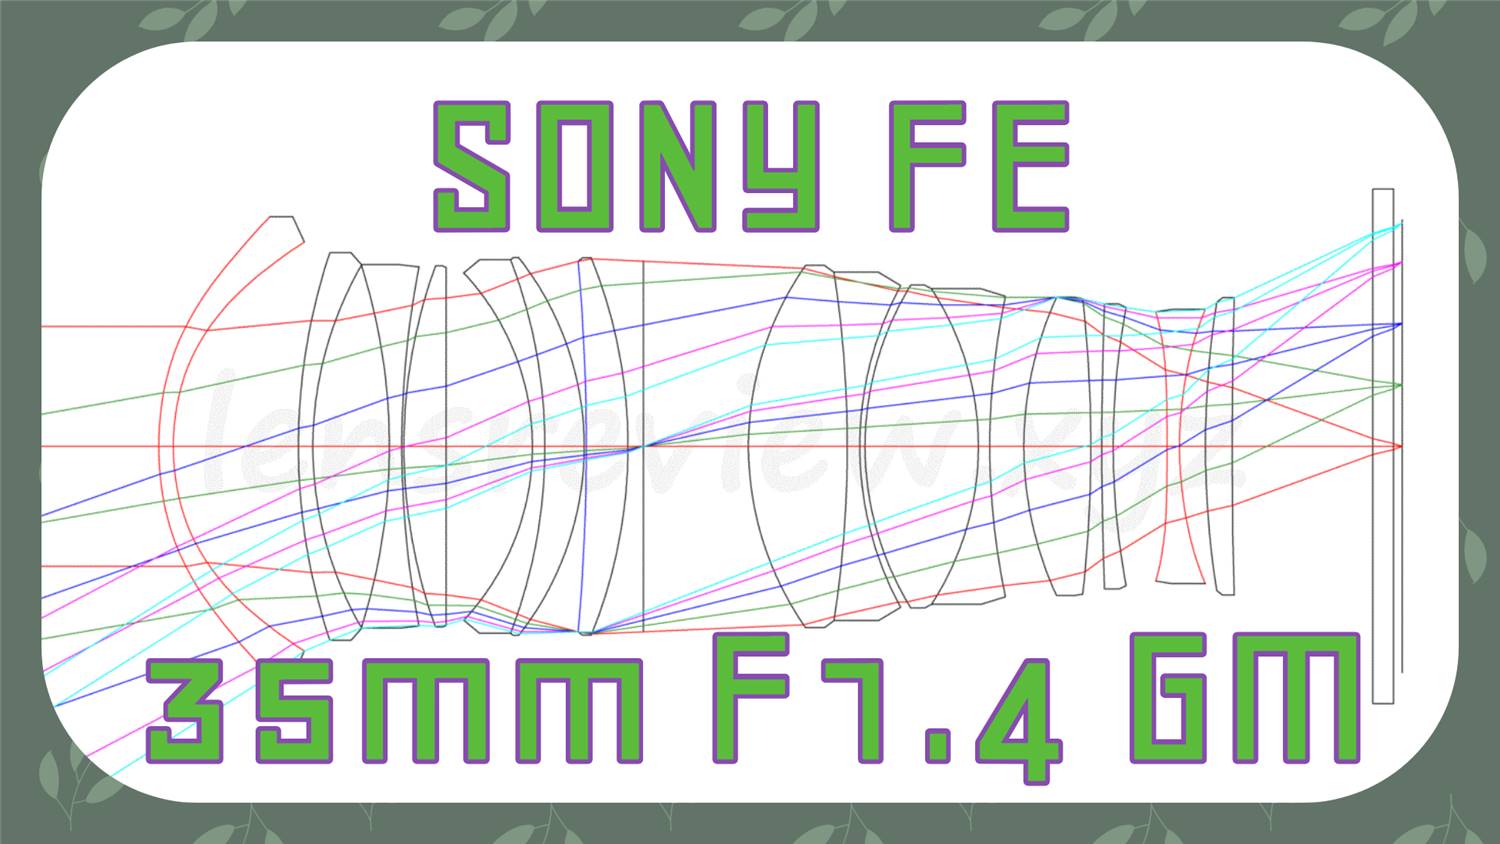 SONY 交換レンズ FE 35F1.4 GM